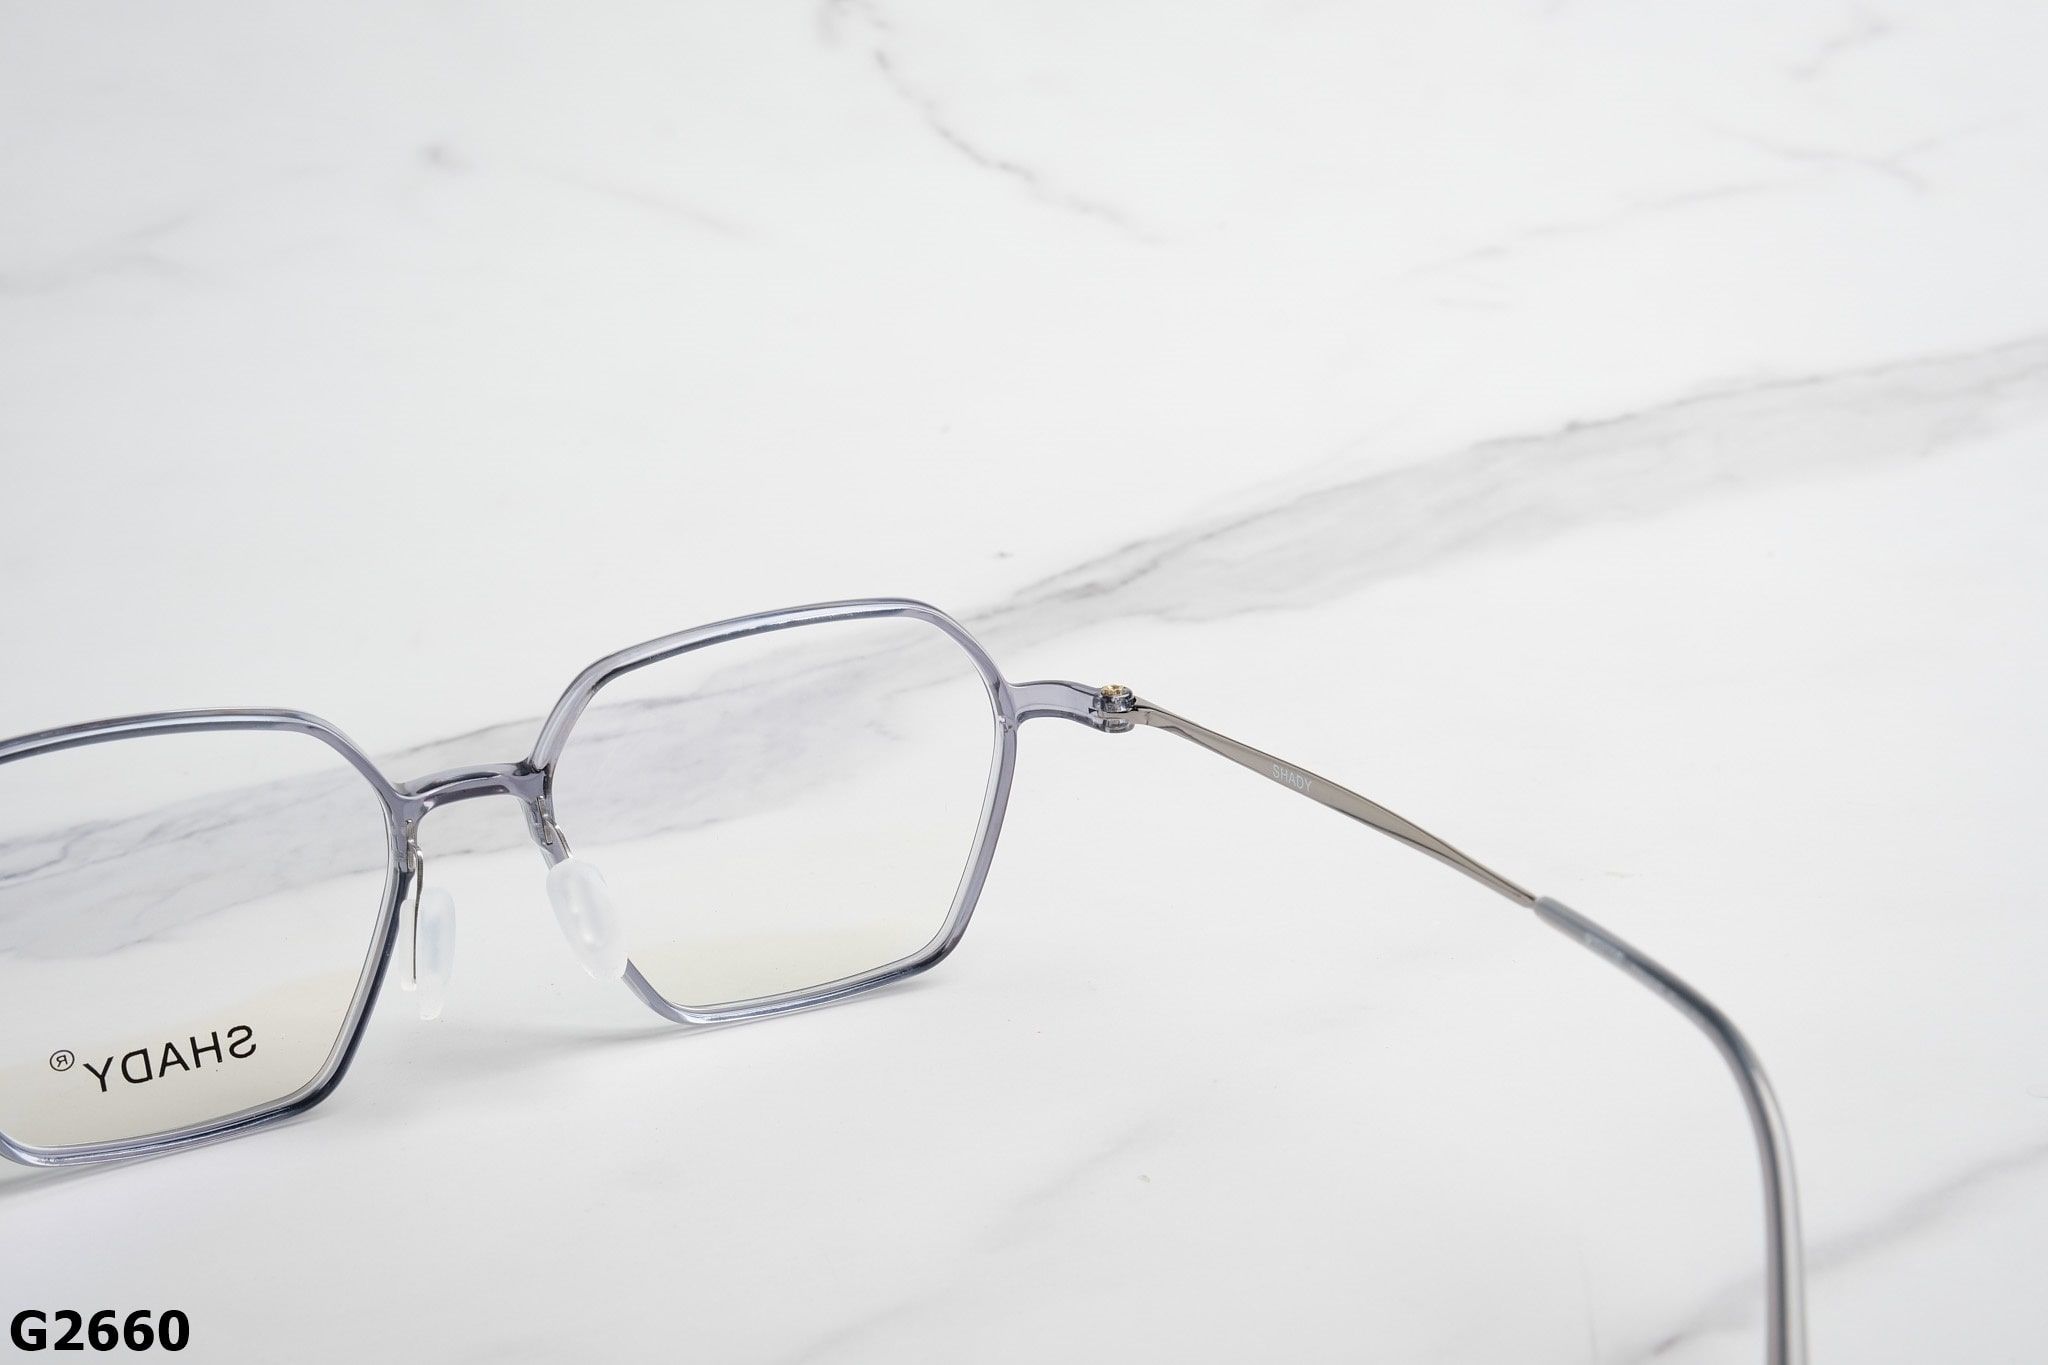  SHADY Eyewear - Glasses - G2660 